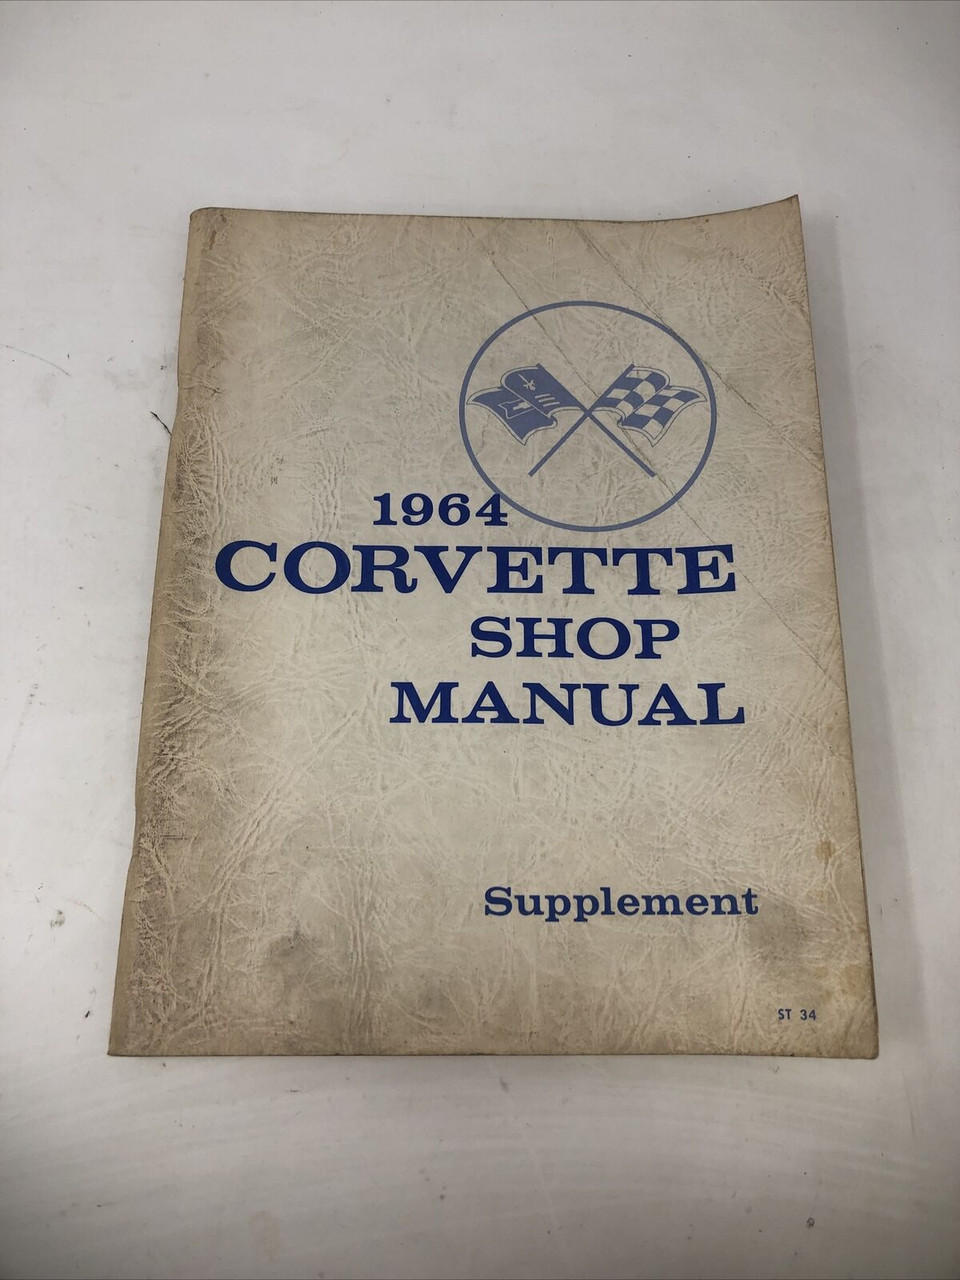 CORVETTE SHOP MANUAL SUPPLEMENT 1964 - PREOWNED